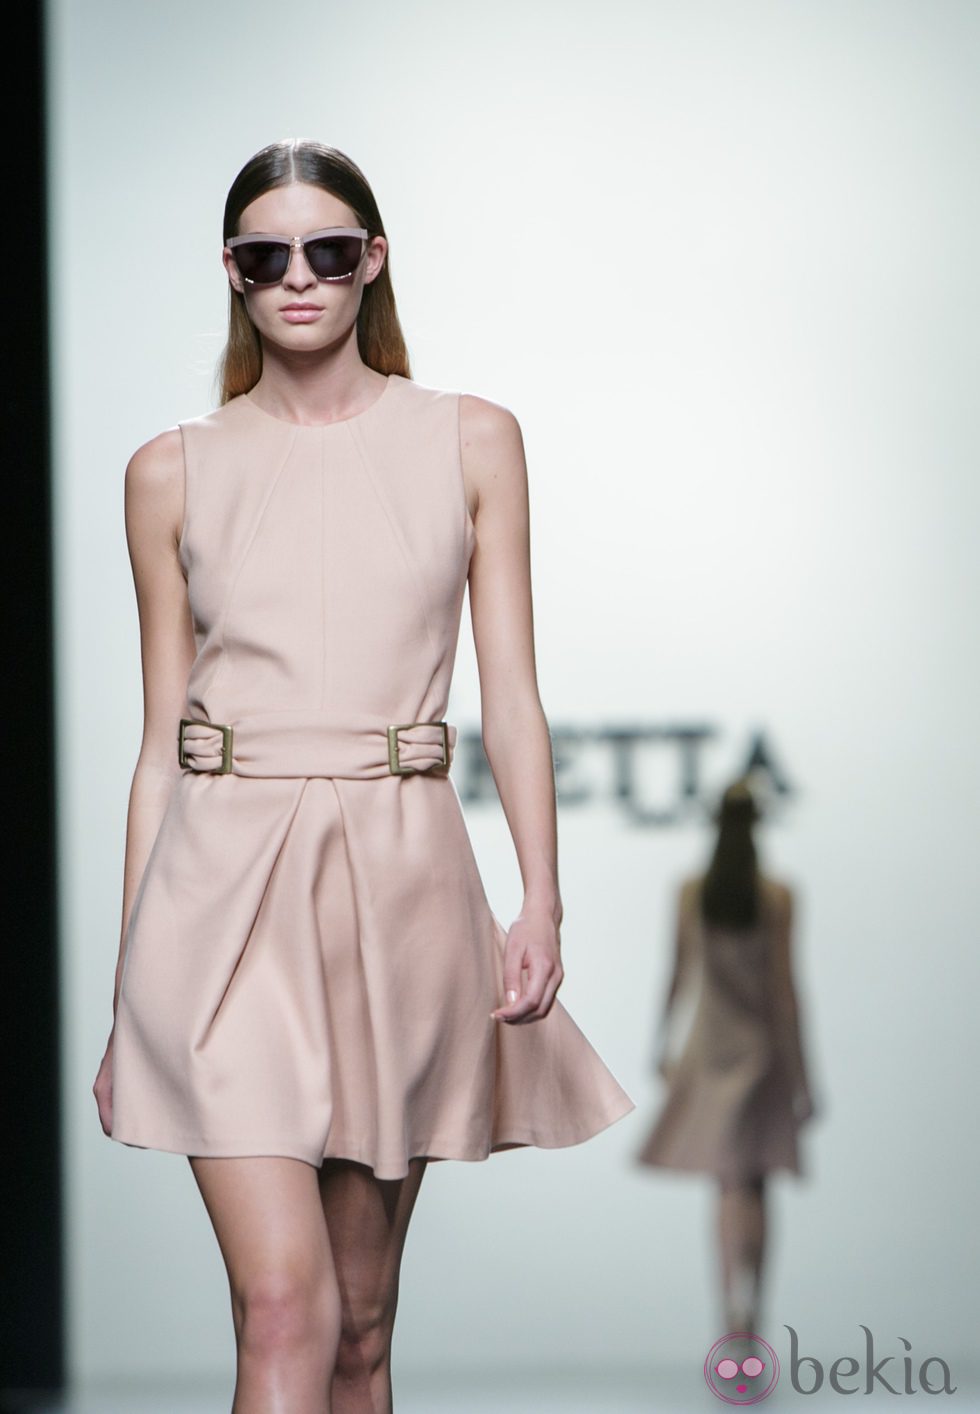 Vestido rosa maquillaje de Roberto Torretta en Madrid Fashion Week primavera/verano 2015